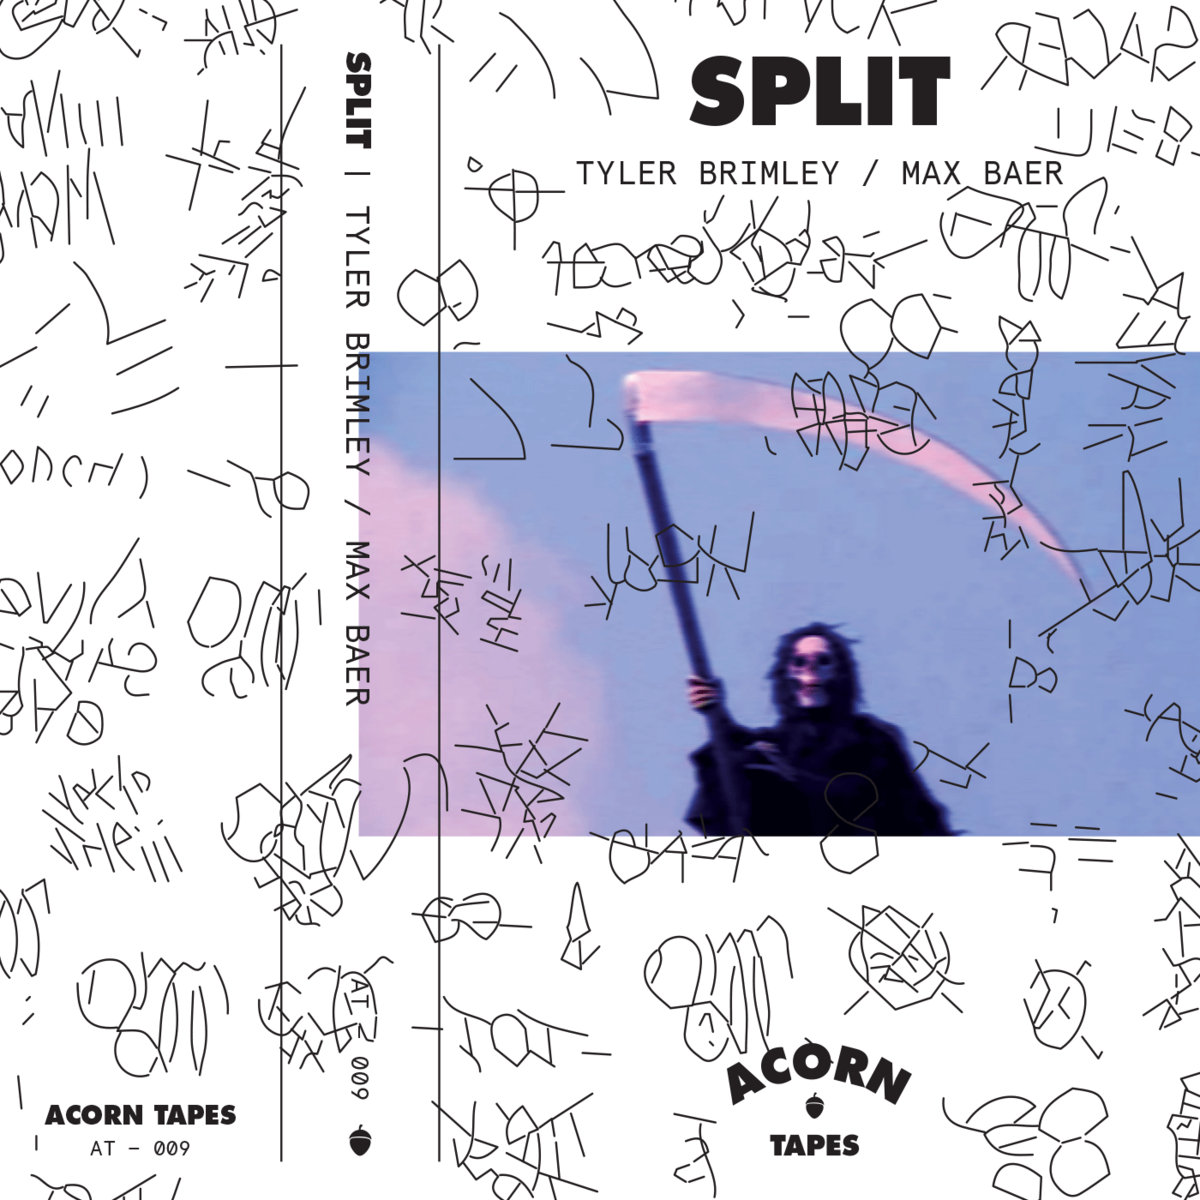 Tyler Brimley & Max Baer - "SPLIT" (Release)